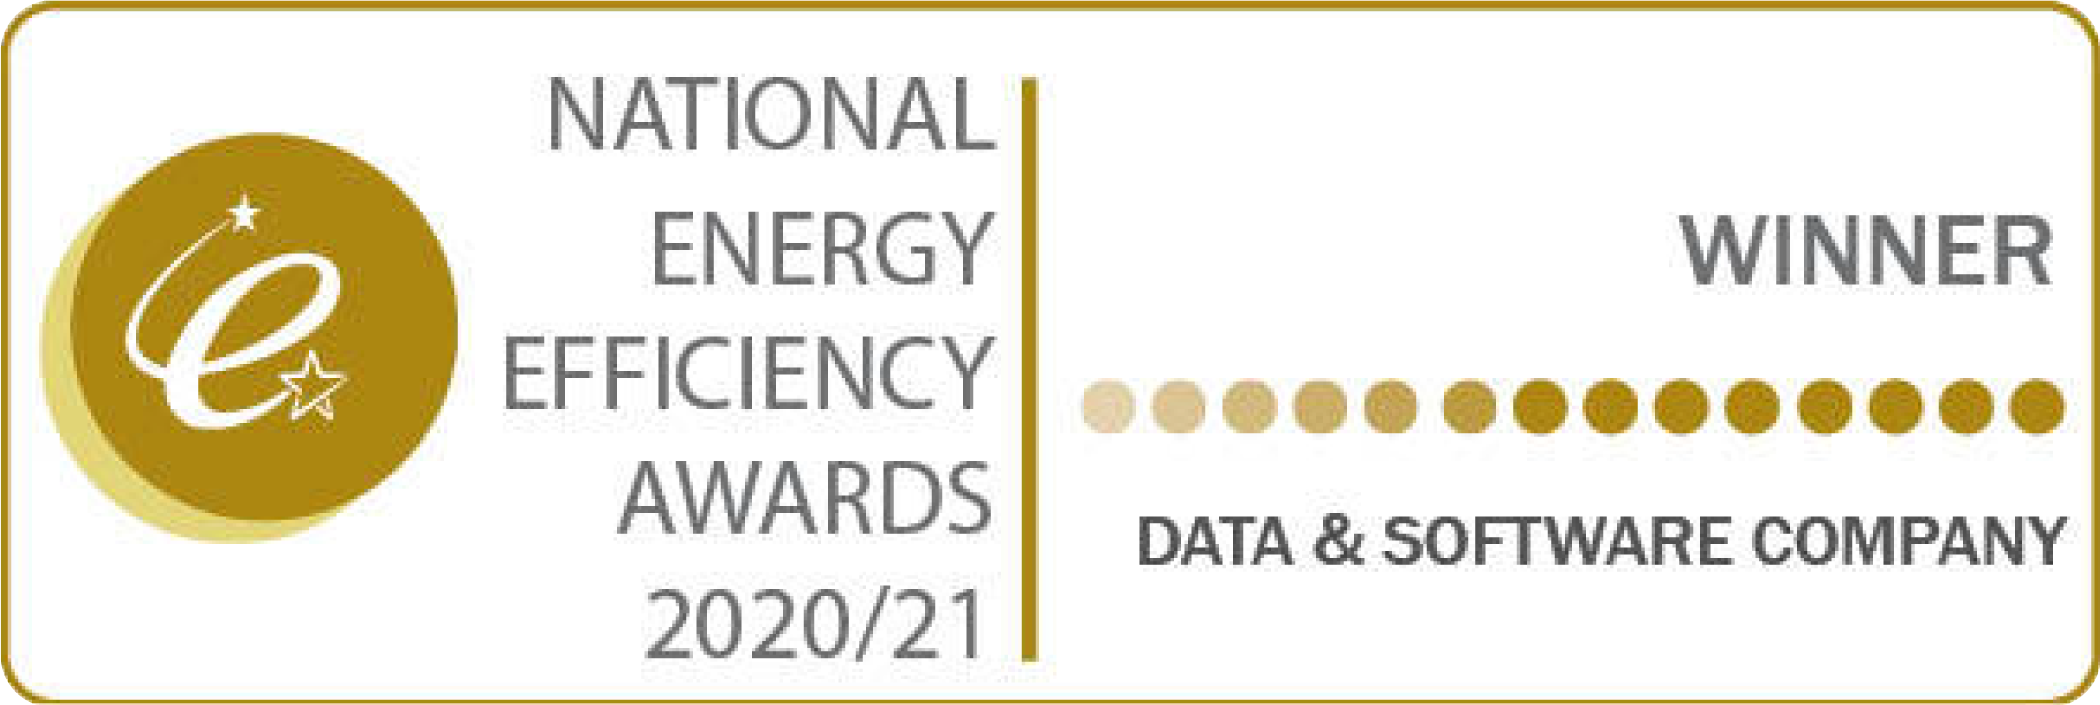 Energy Efficiency Awards 2020